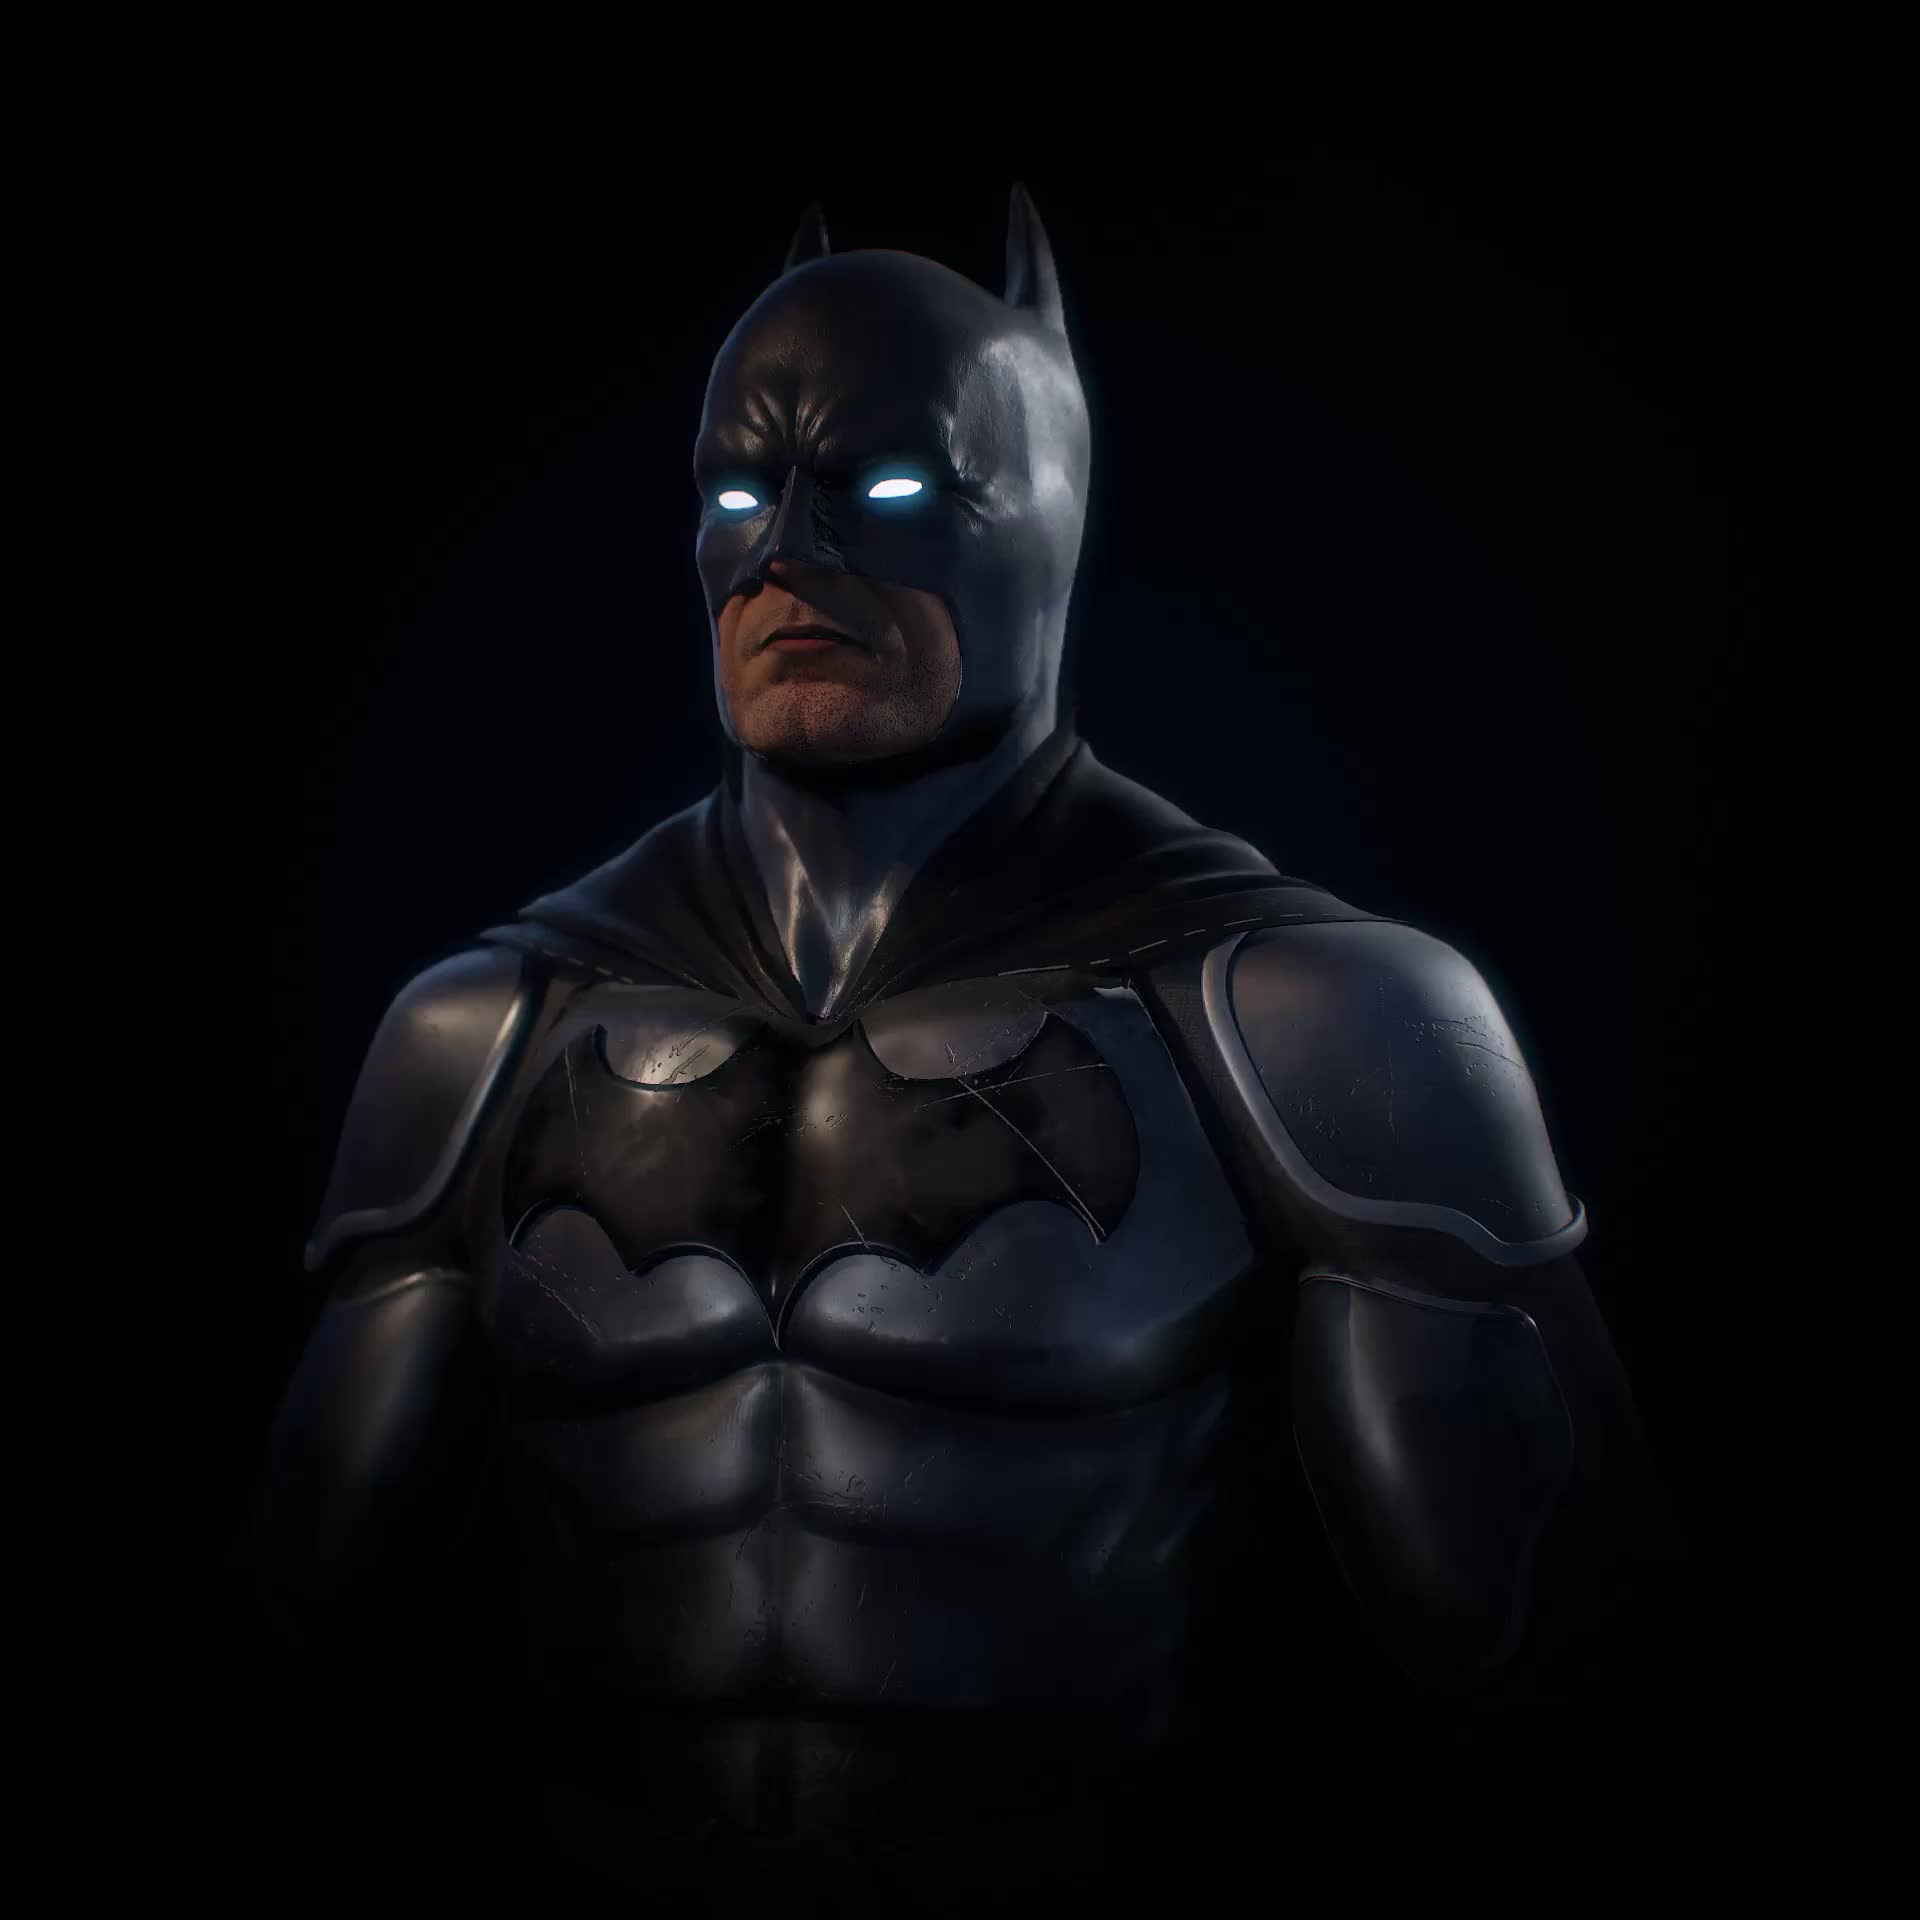 I made a Batman Arkham Knight wallpaper inspired by the Batman